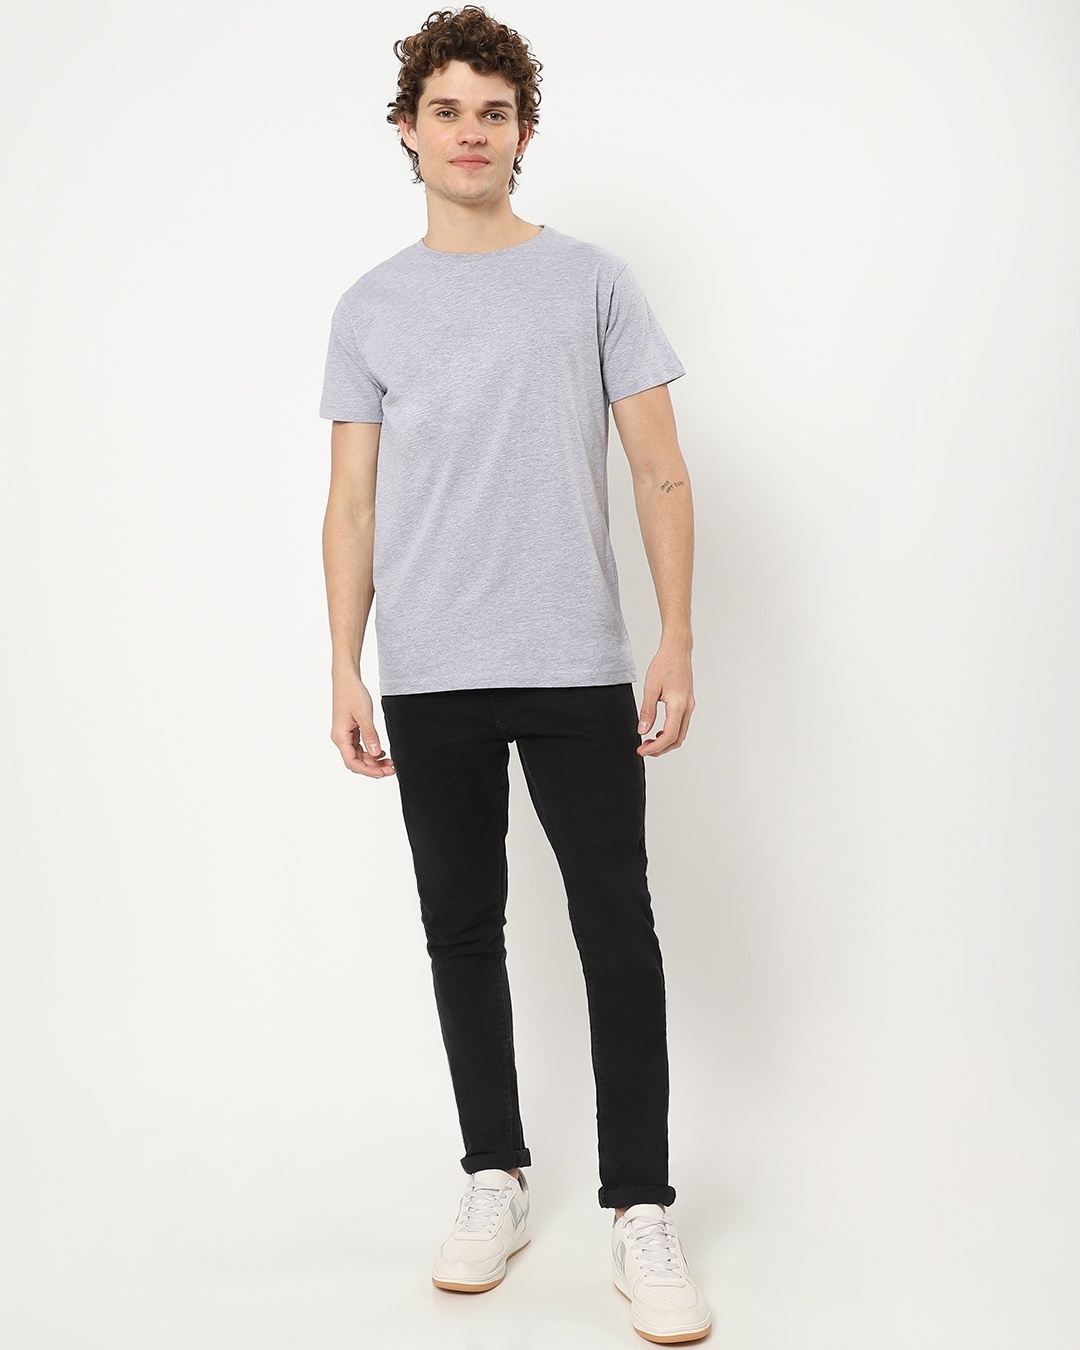 Shop Light Grey Melange Half Sleeve T-Shirt